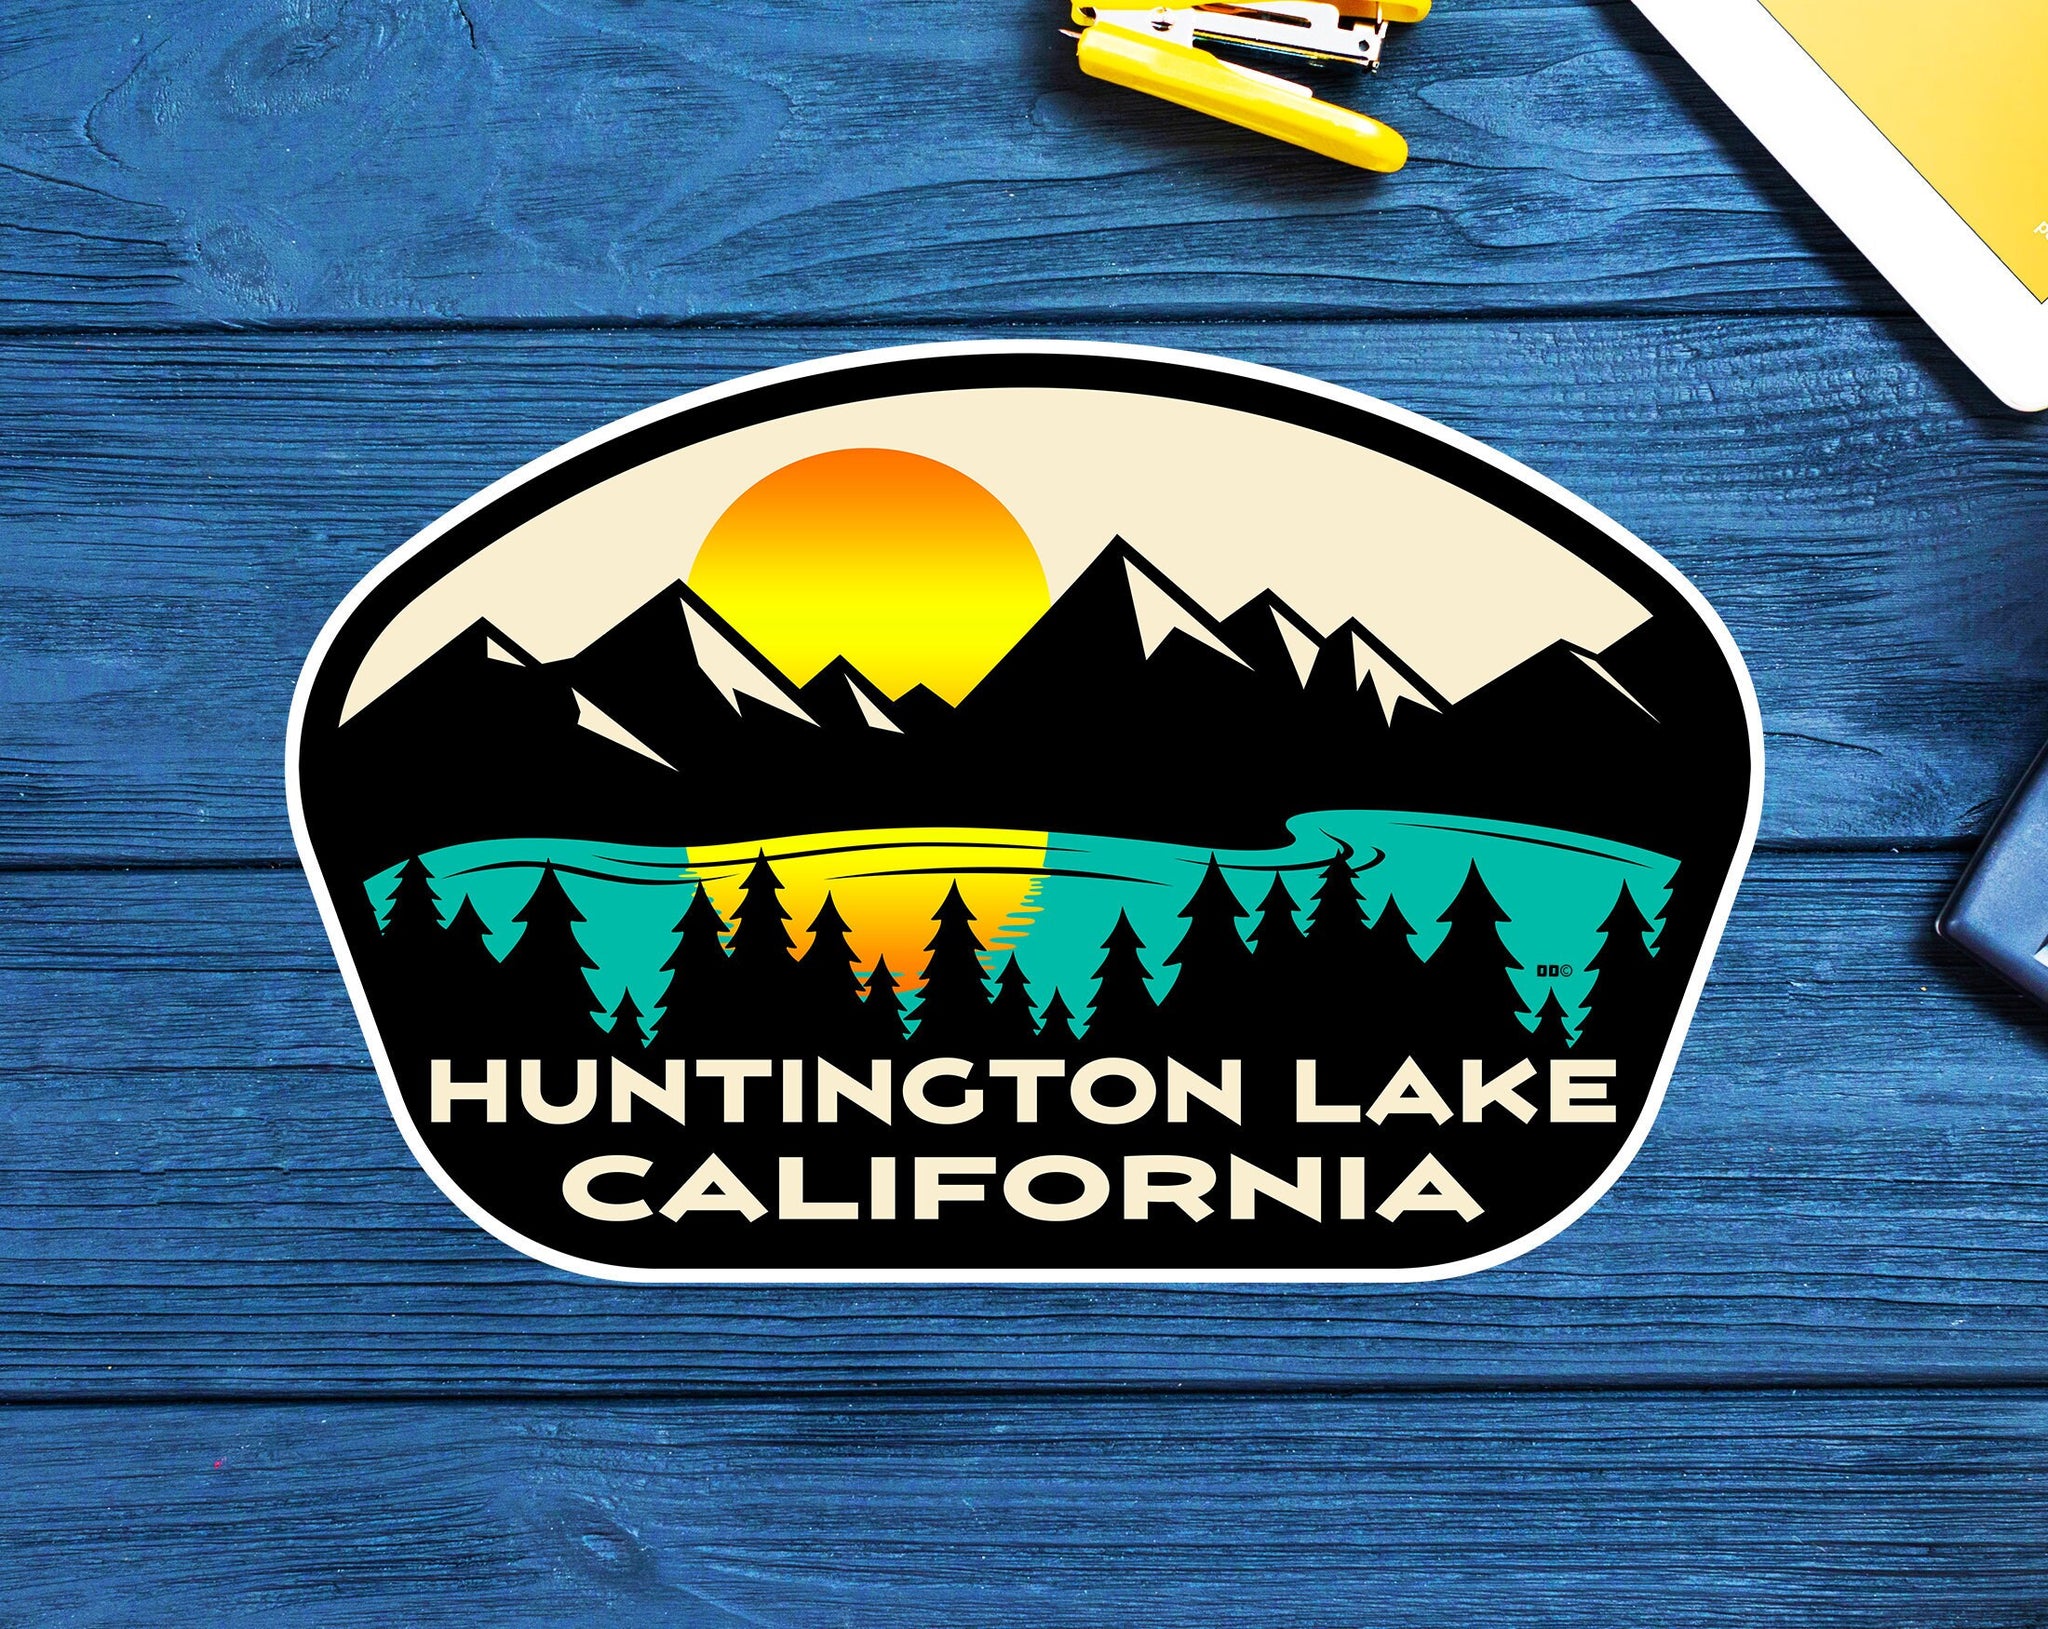 Huntington Lake California Decal Sticker 3.75" X 2.5" Lakes Vinyl